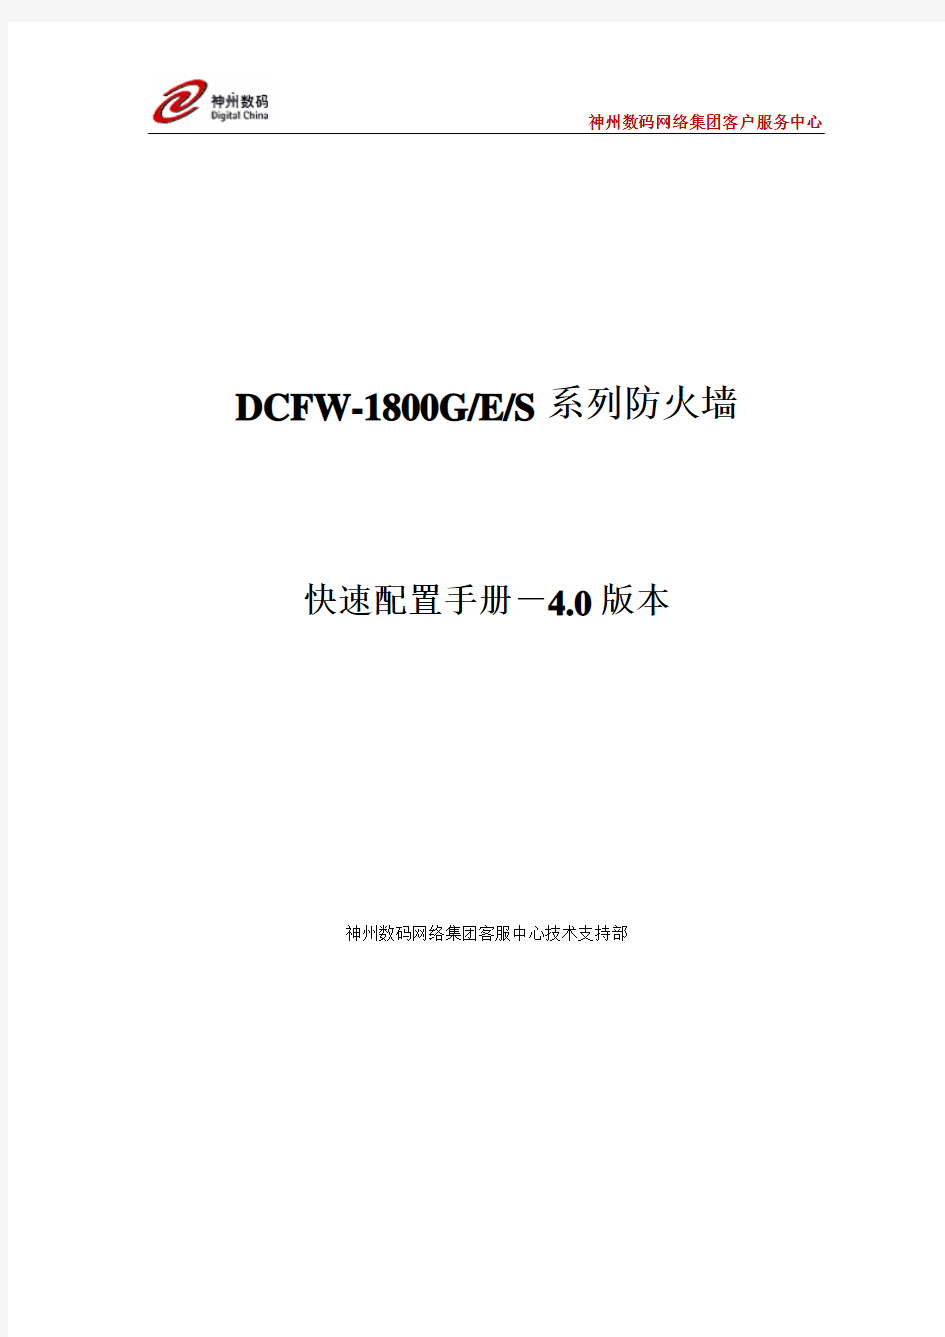 DCFW-1800GES 防火墙快速配置手册--v4[1].0版本